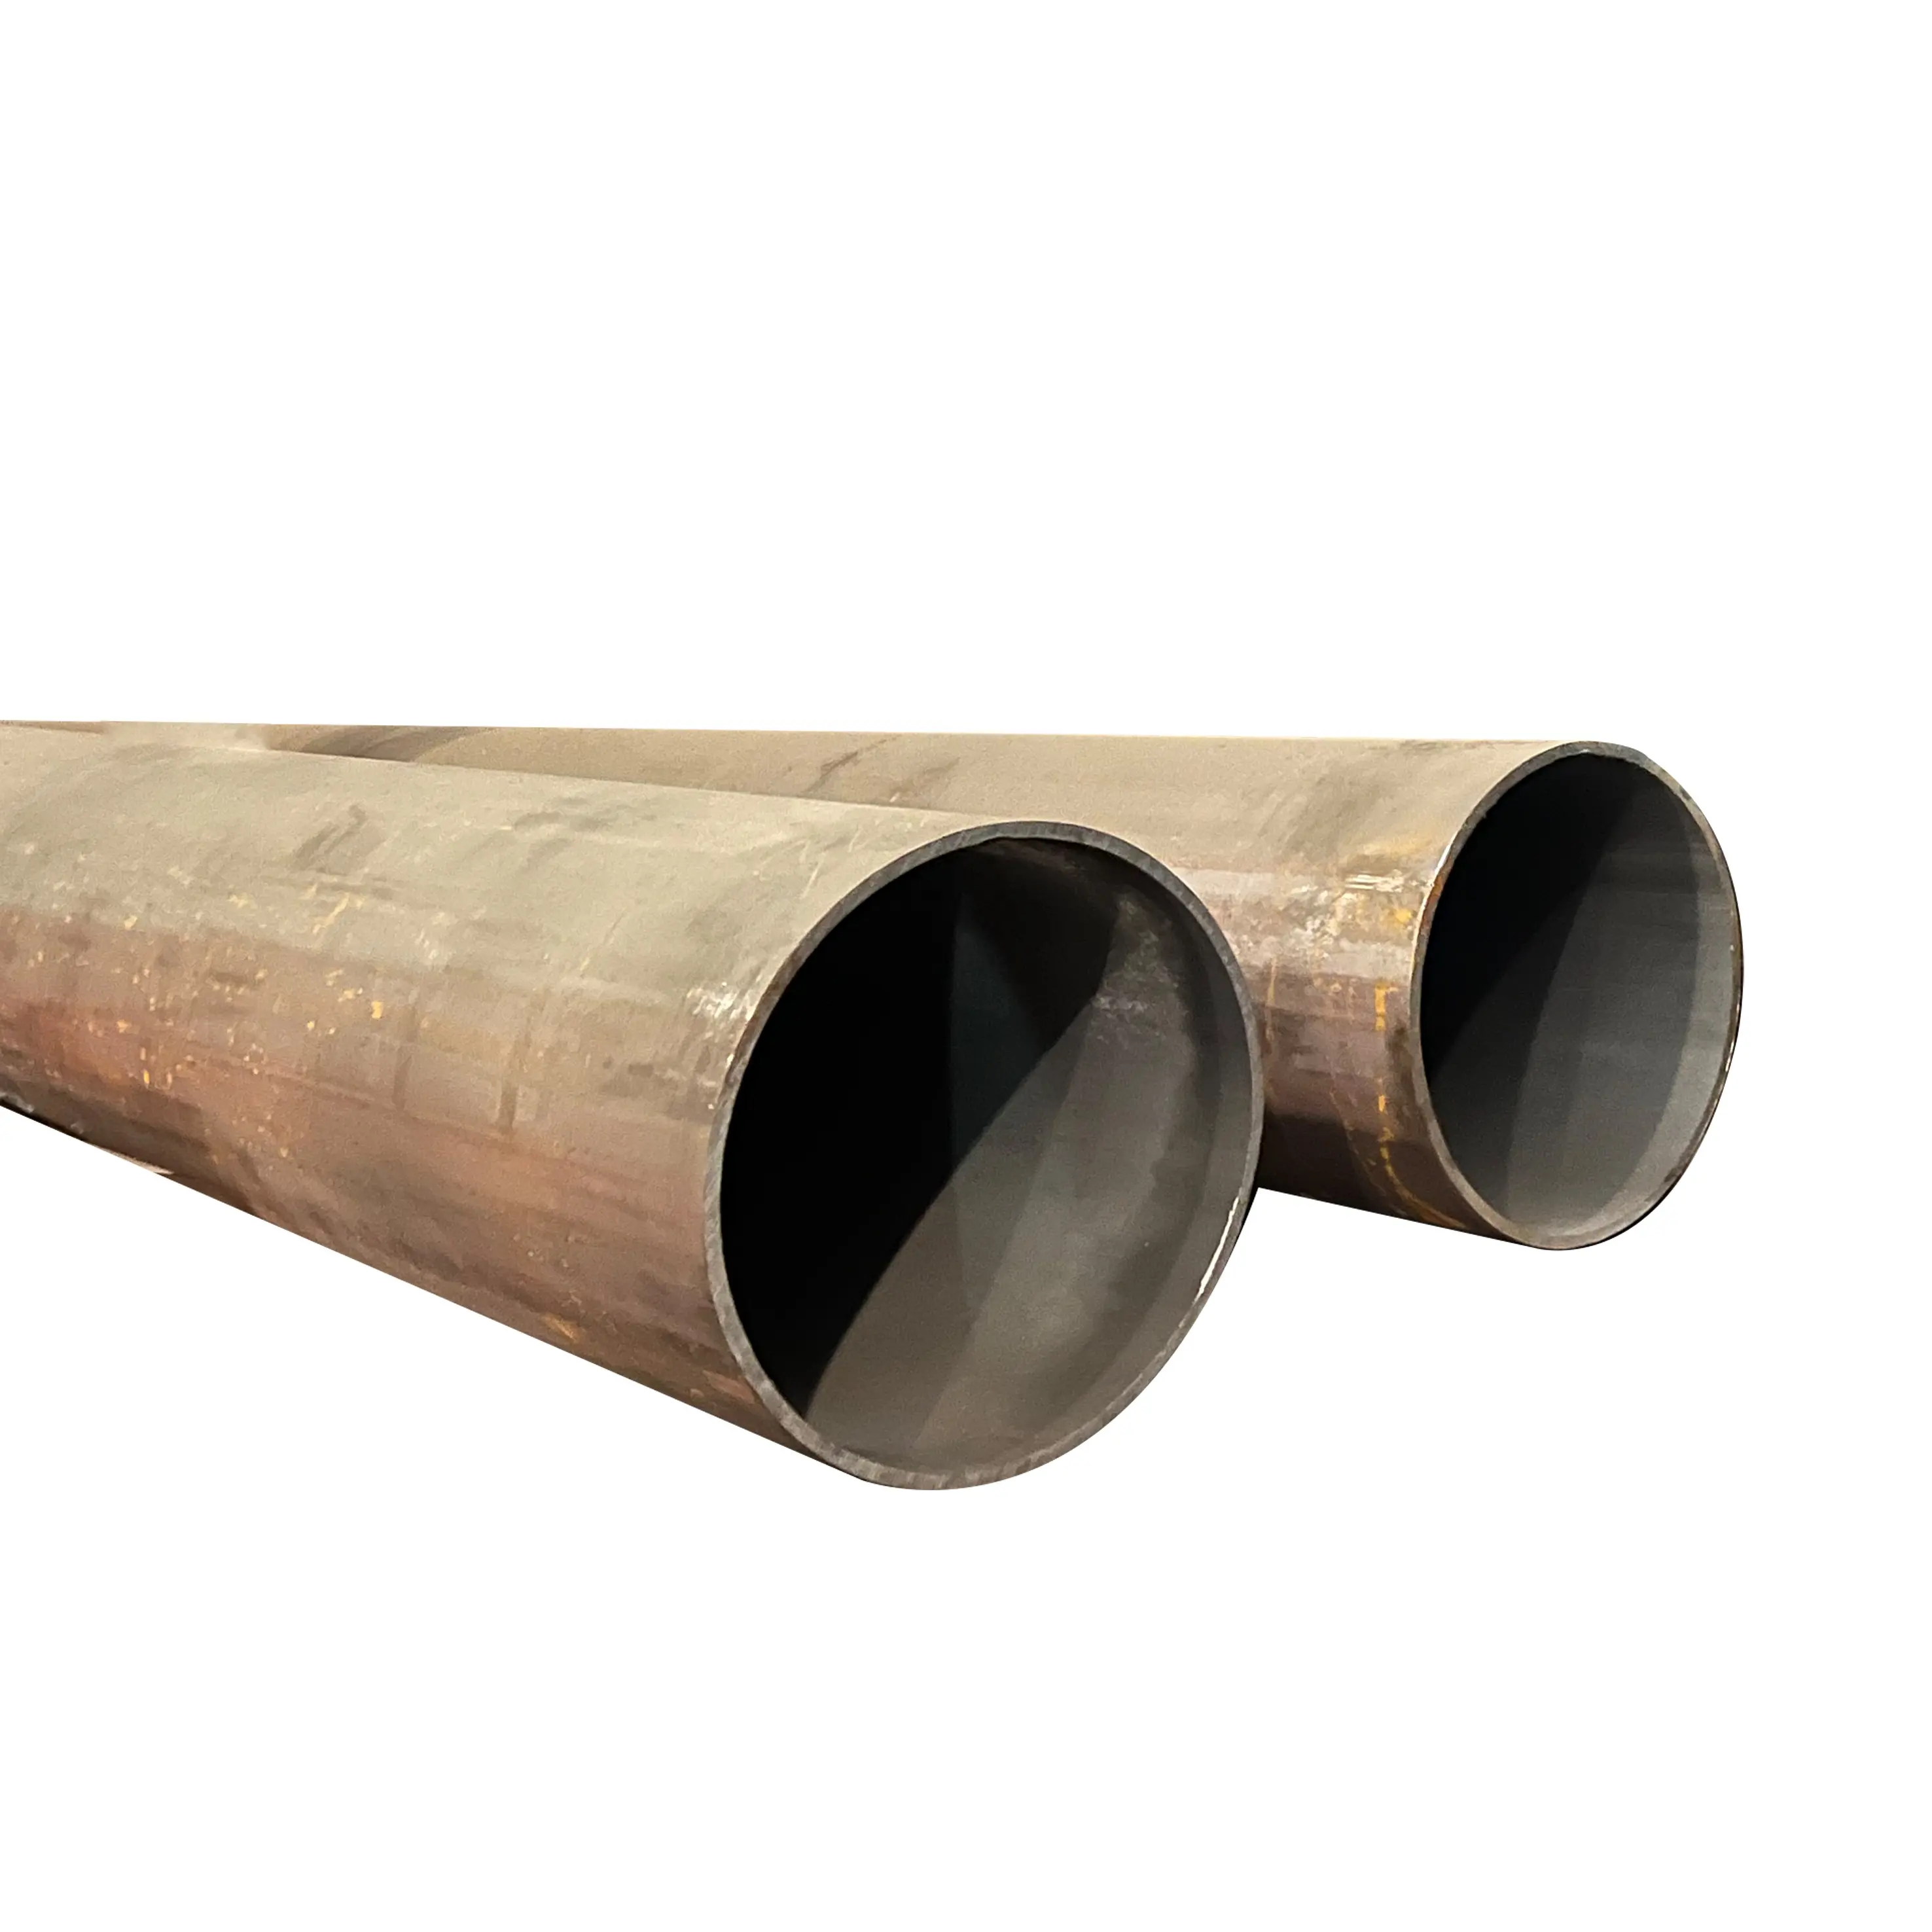 Tubi laminati a caldo astm tubi API 5L sch 40 astm A106 A53 tubi rotondi in acciaio al carbonio senza saldatura